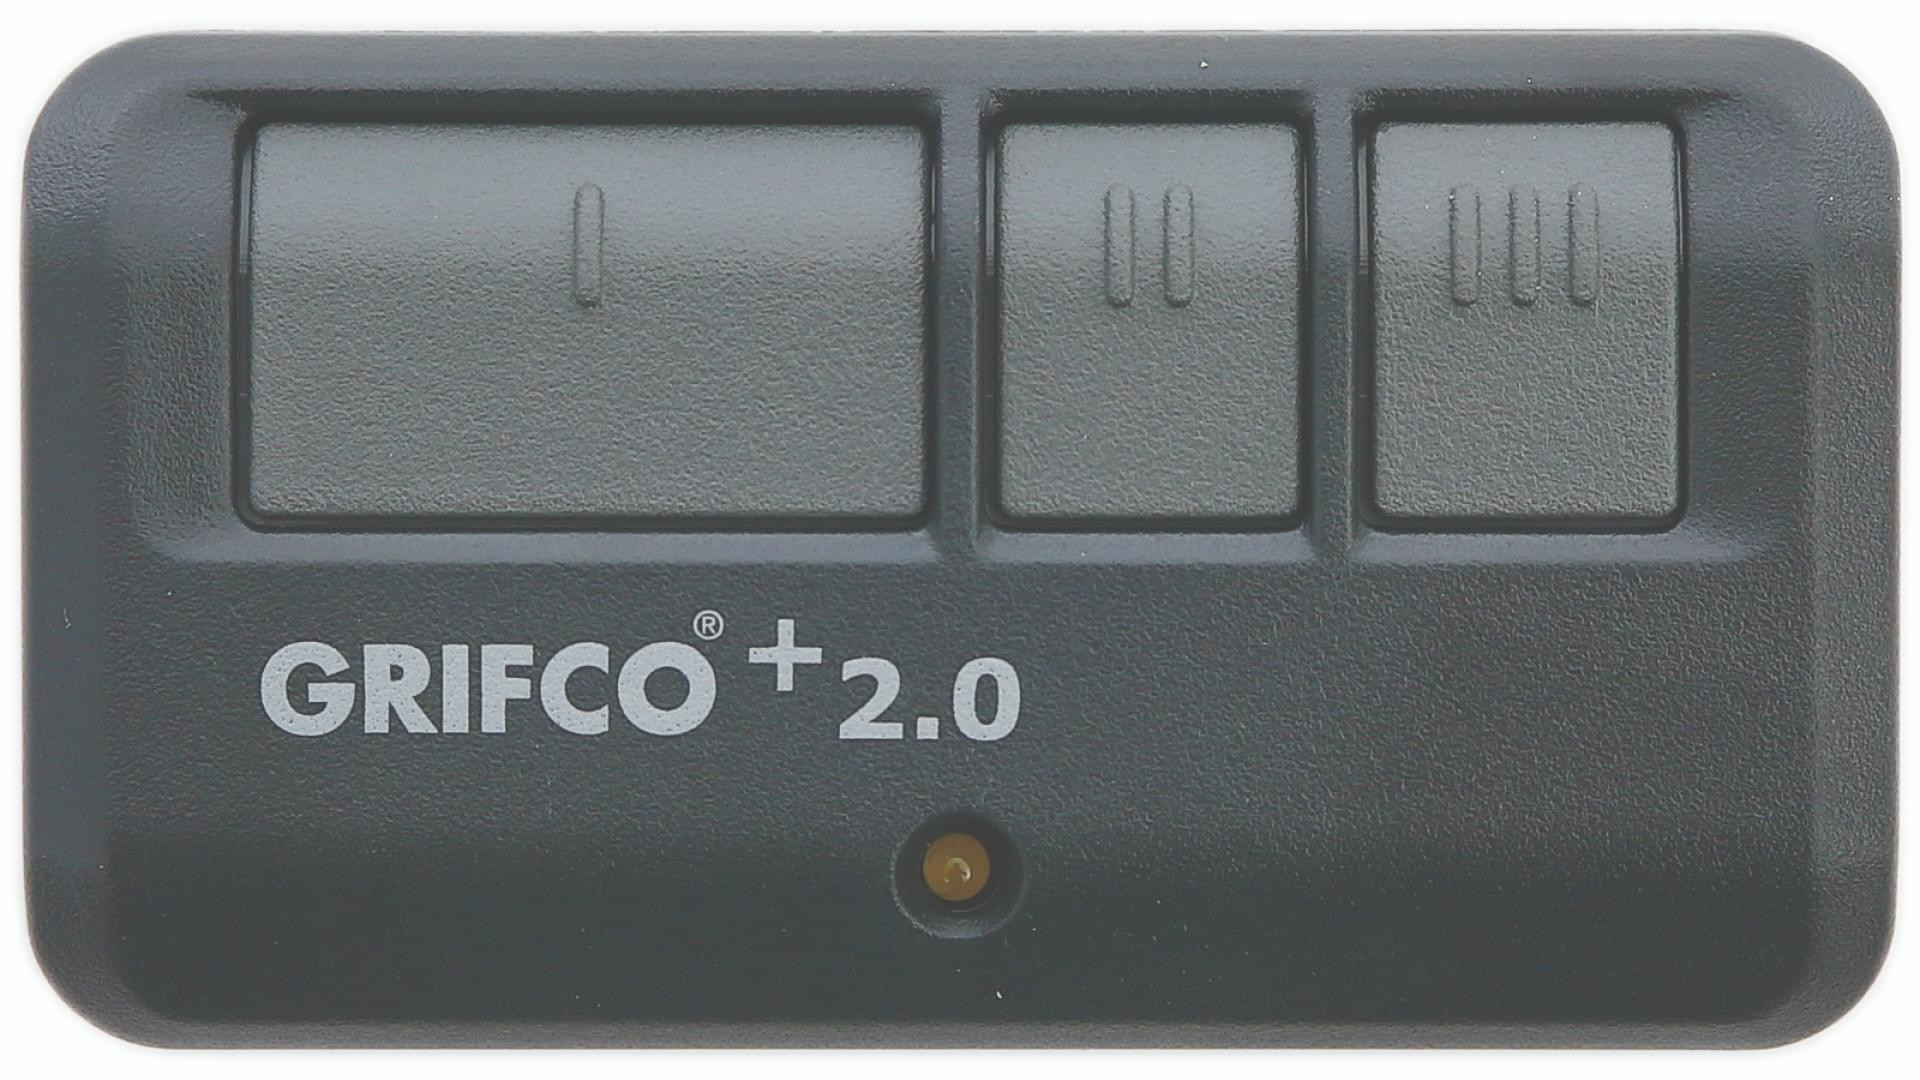 E943G - Wireless Visor Remote from Grifco